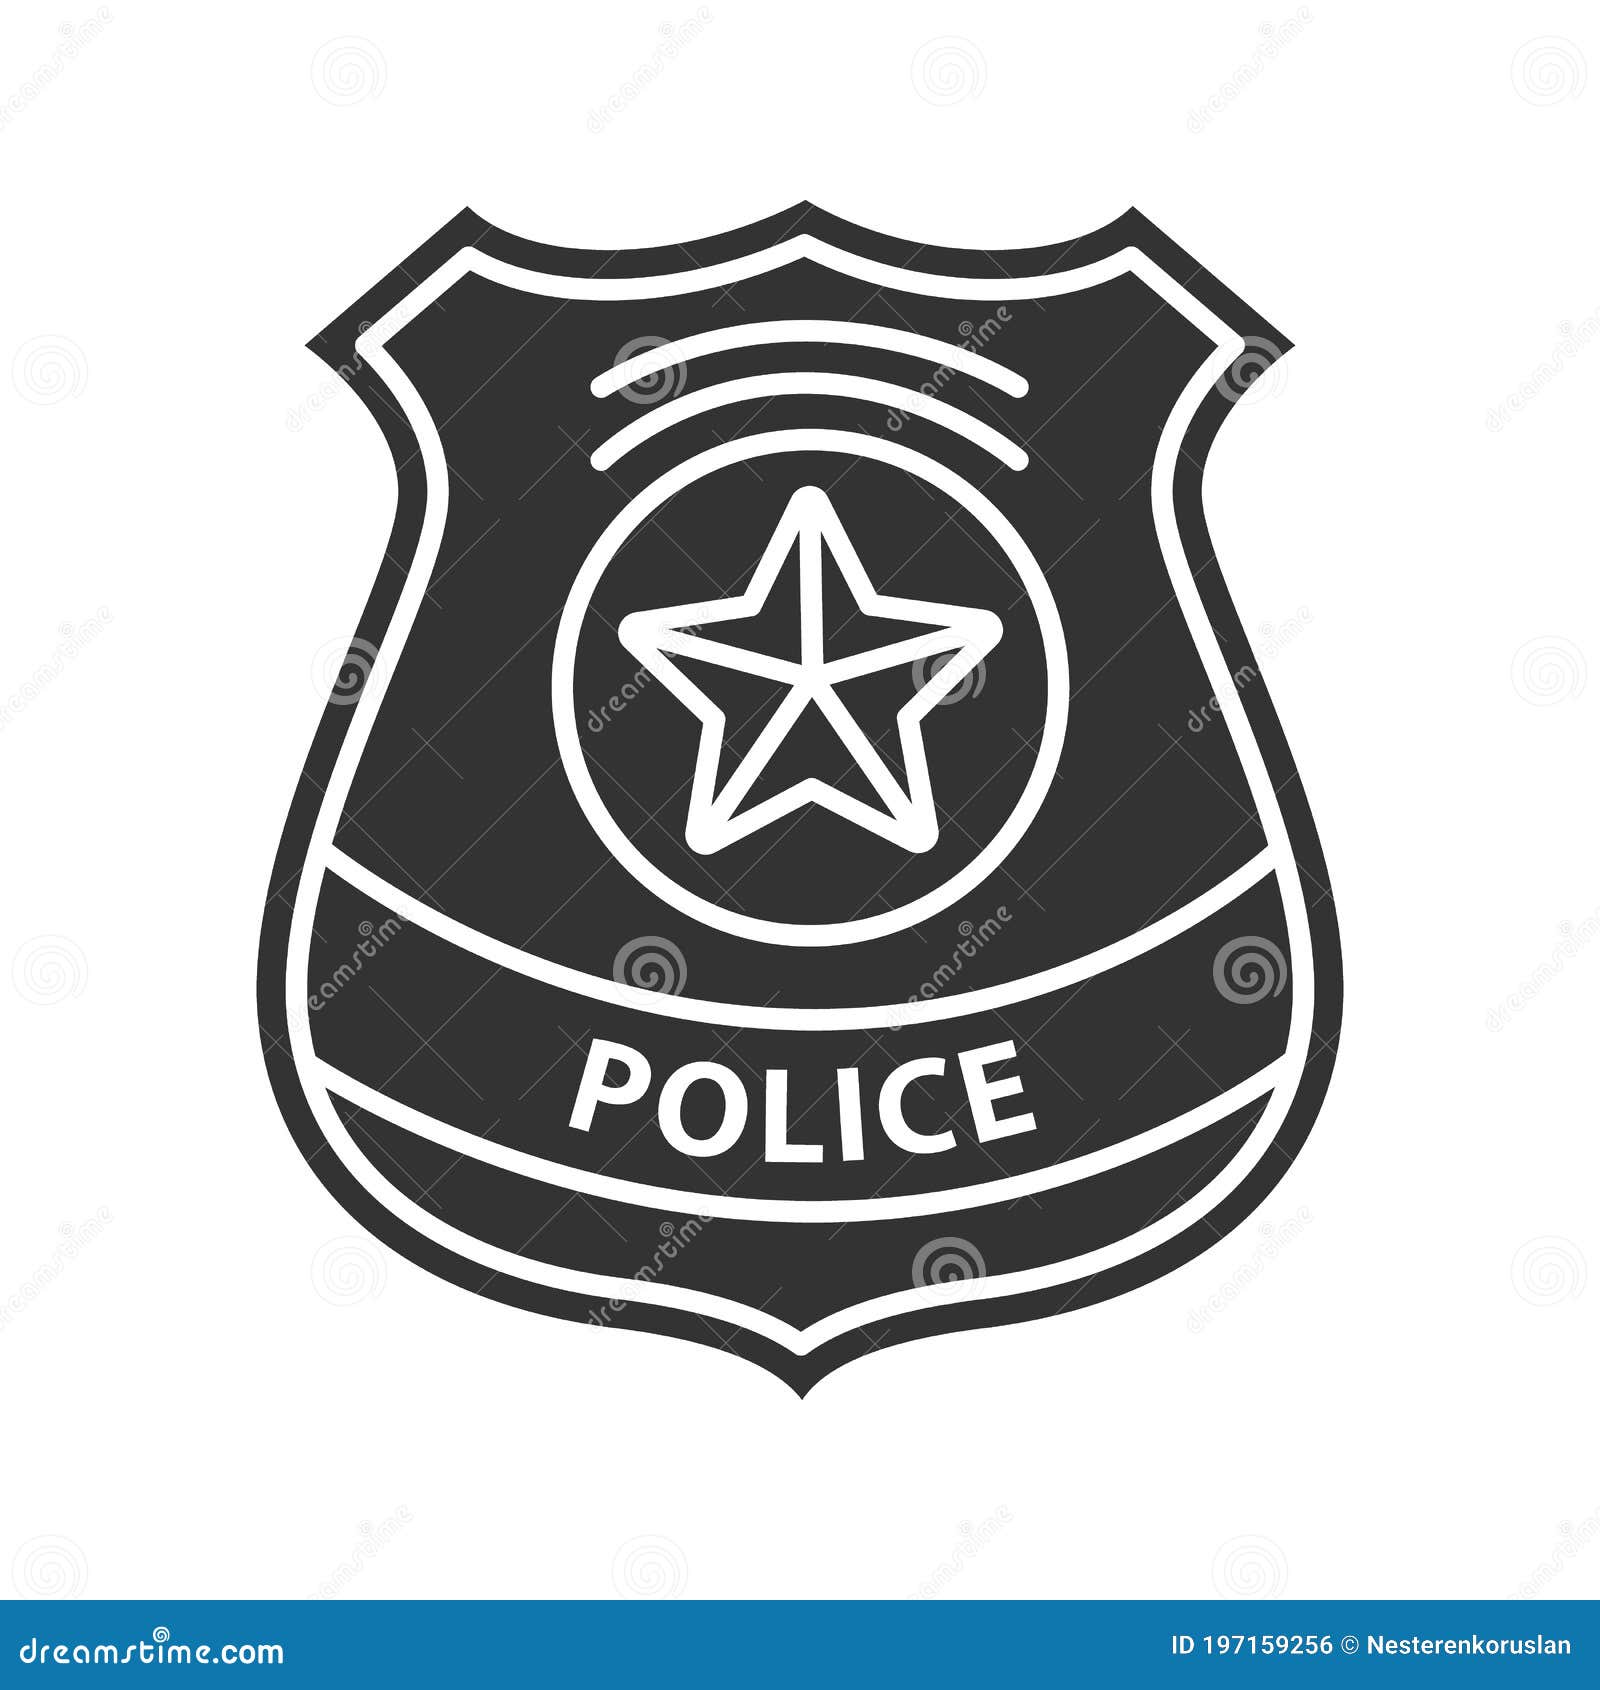 Insigne de policier image stock. Illustration du chrome - 13977603